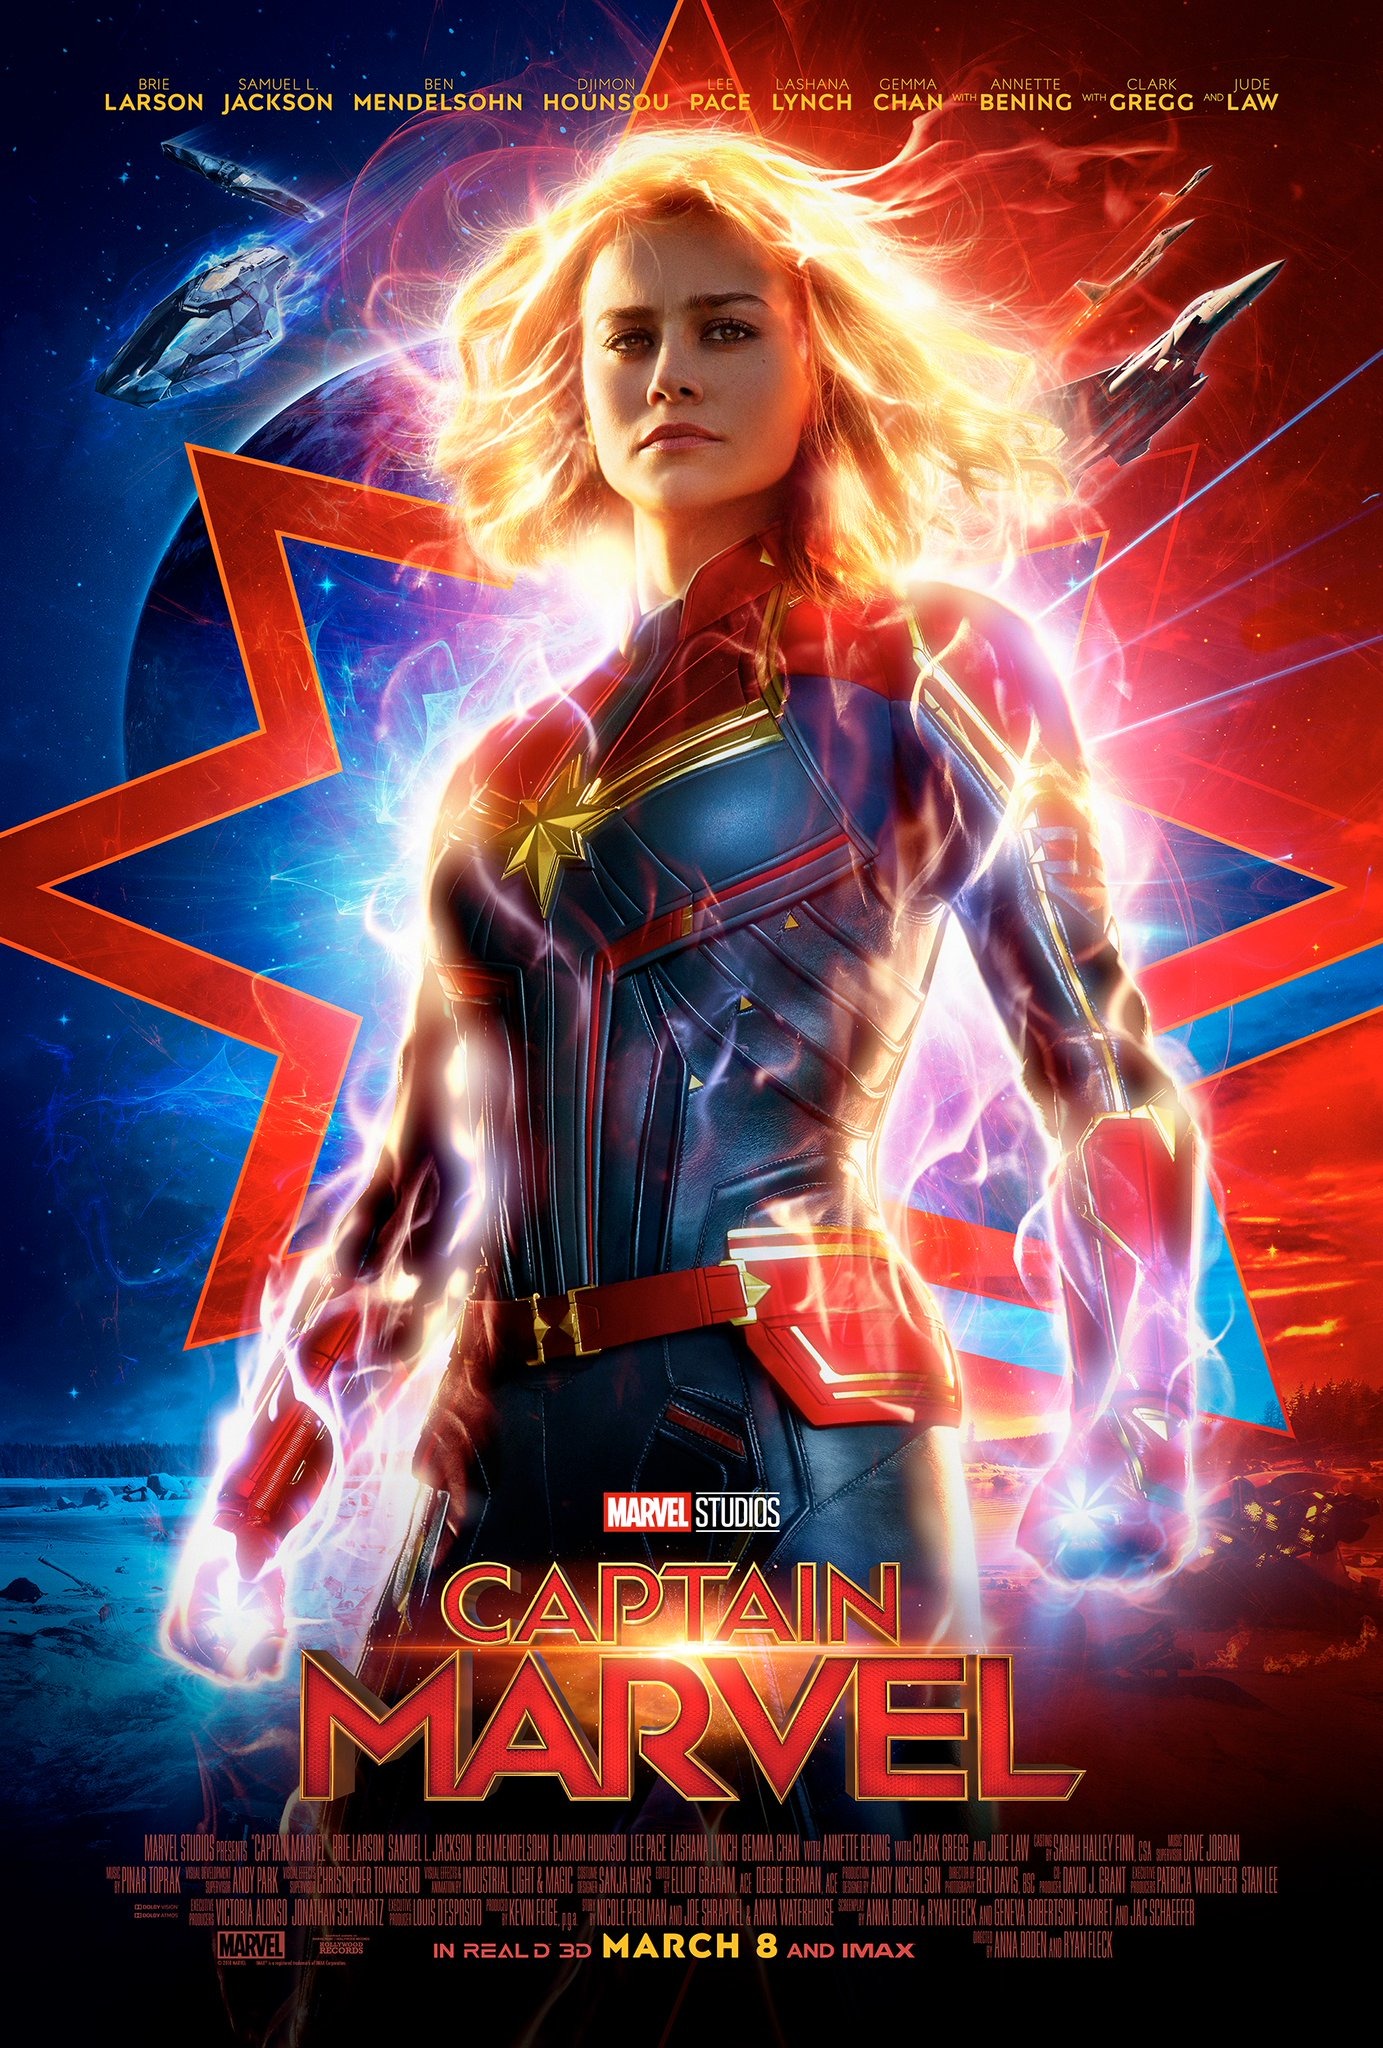 CAPTAIN MARVEL (2019) Movie Trailer 2 & Movie Poster 2 Brie Larson is